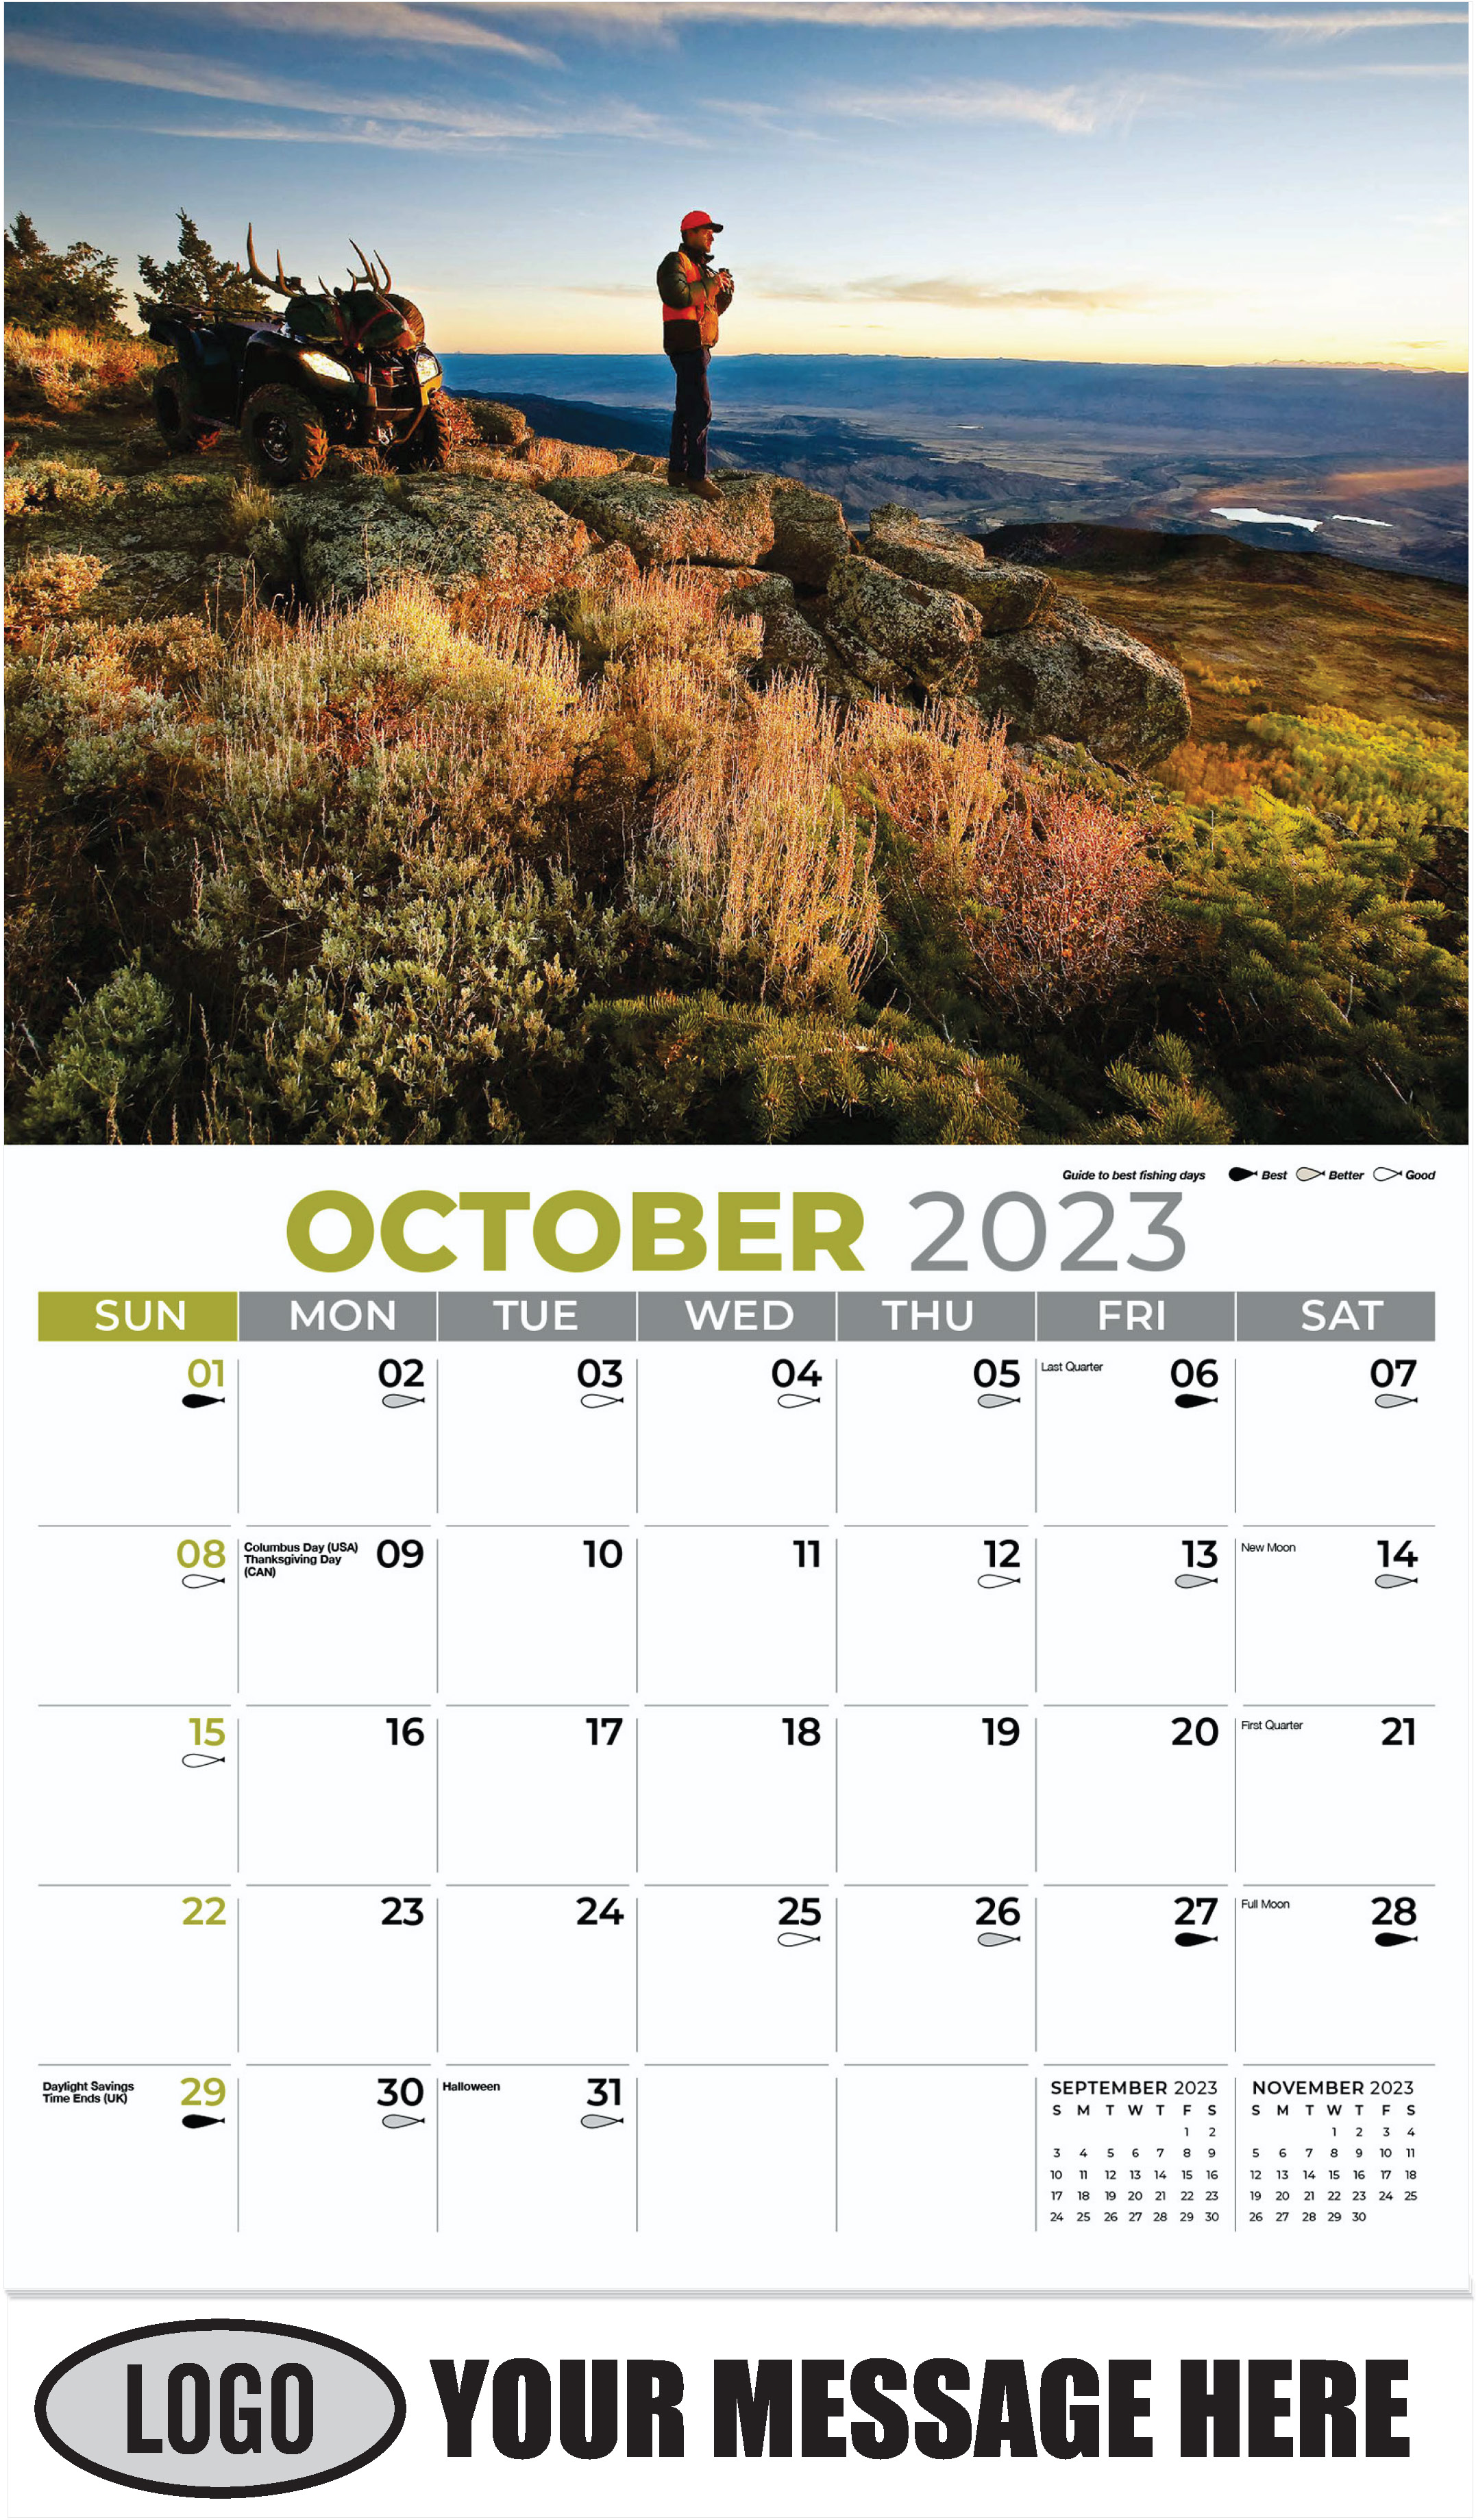 October - Fishing & Hunting 2023 Promotional Calendar